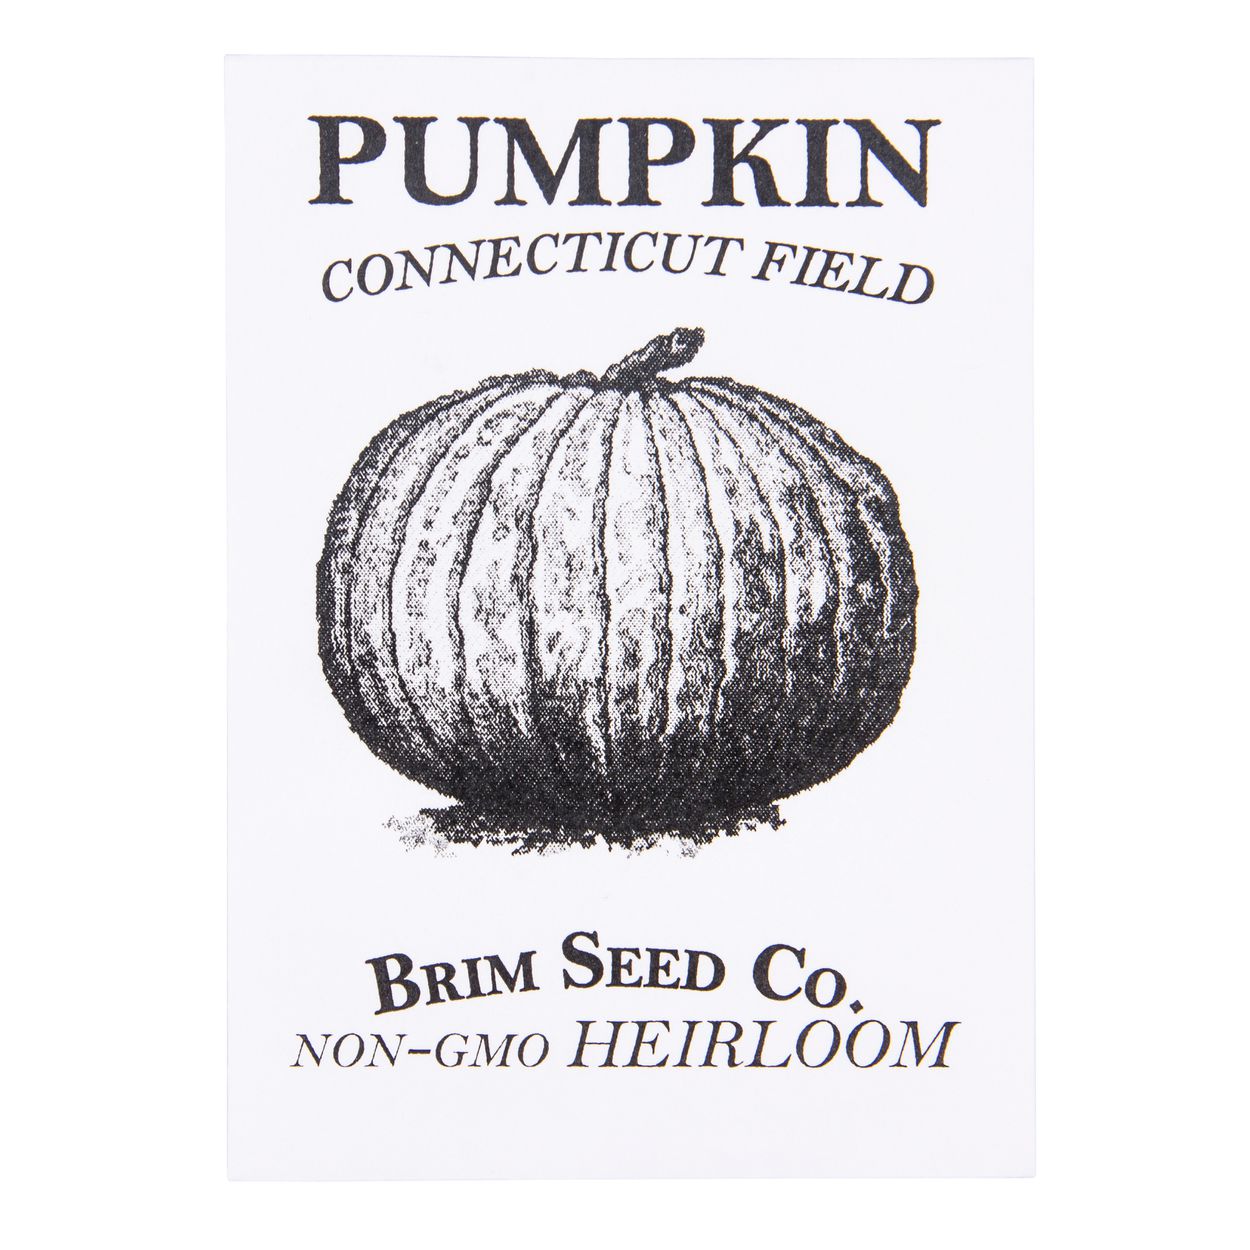 Brim Seed Co. - Connecticut Field Pumpkin Heirloom Seed